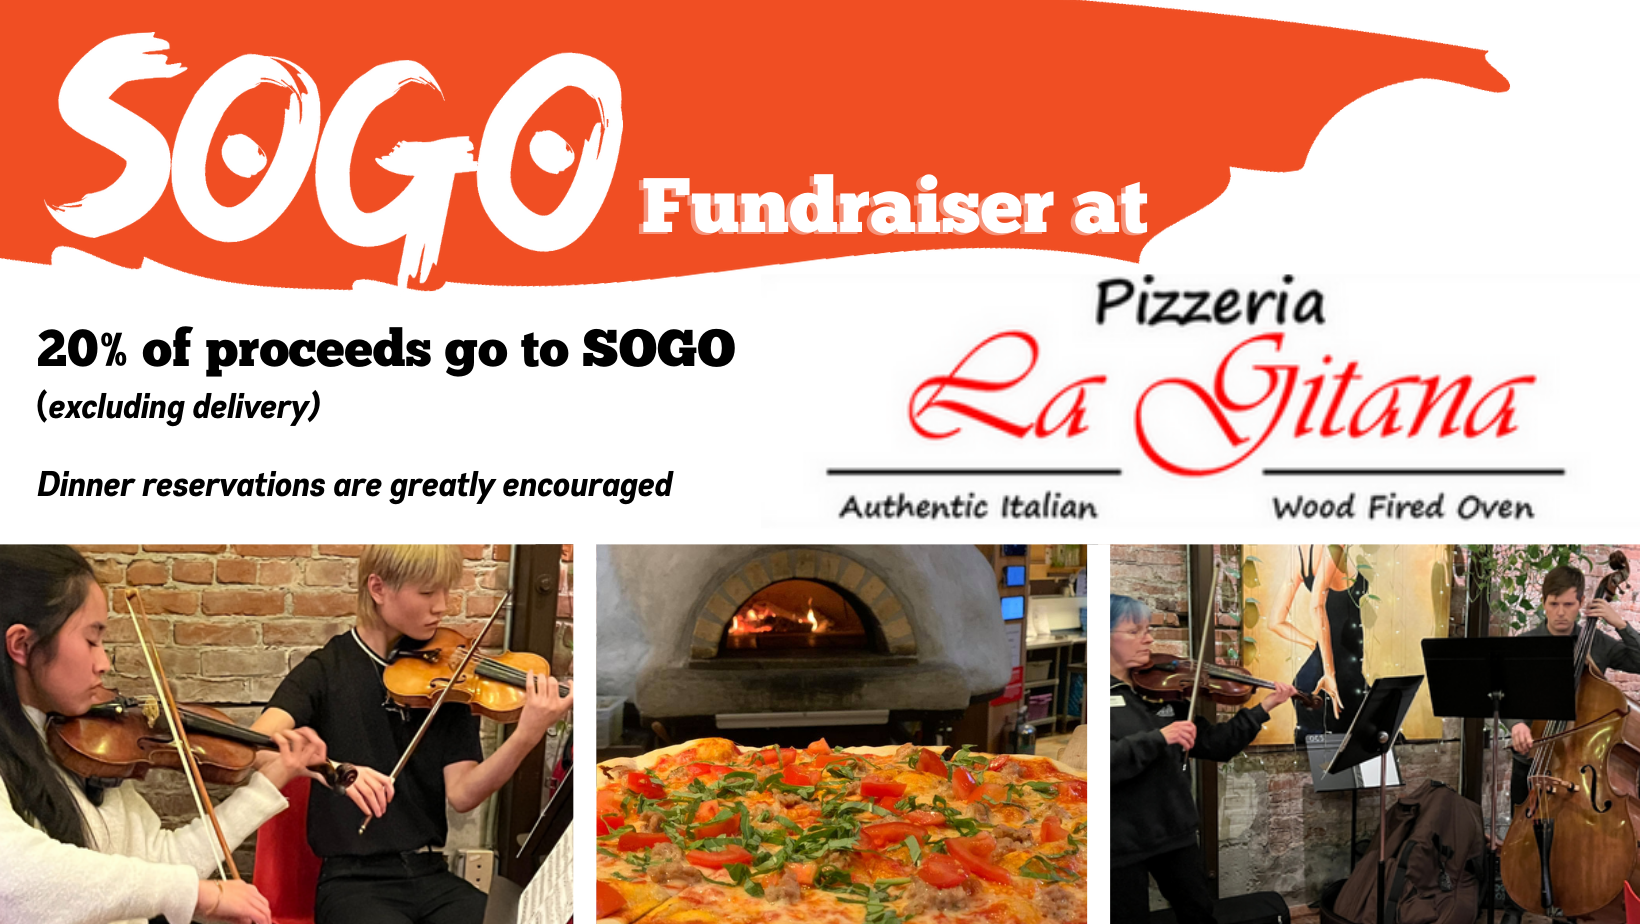 SOGO fundraiser at Pizzeria La Gitana